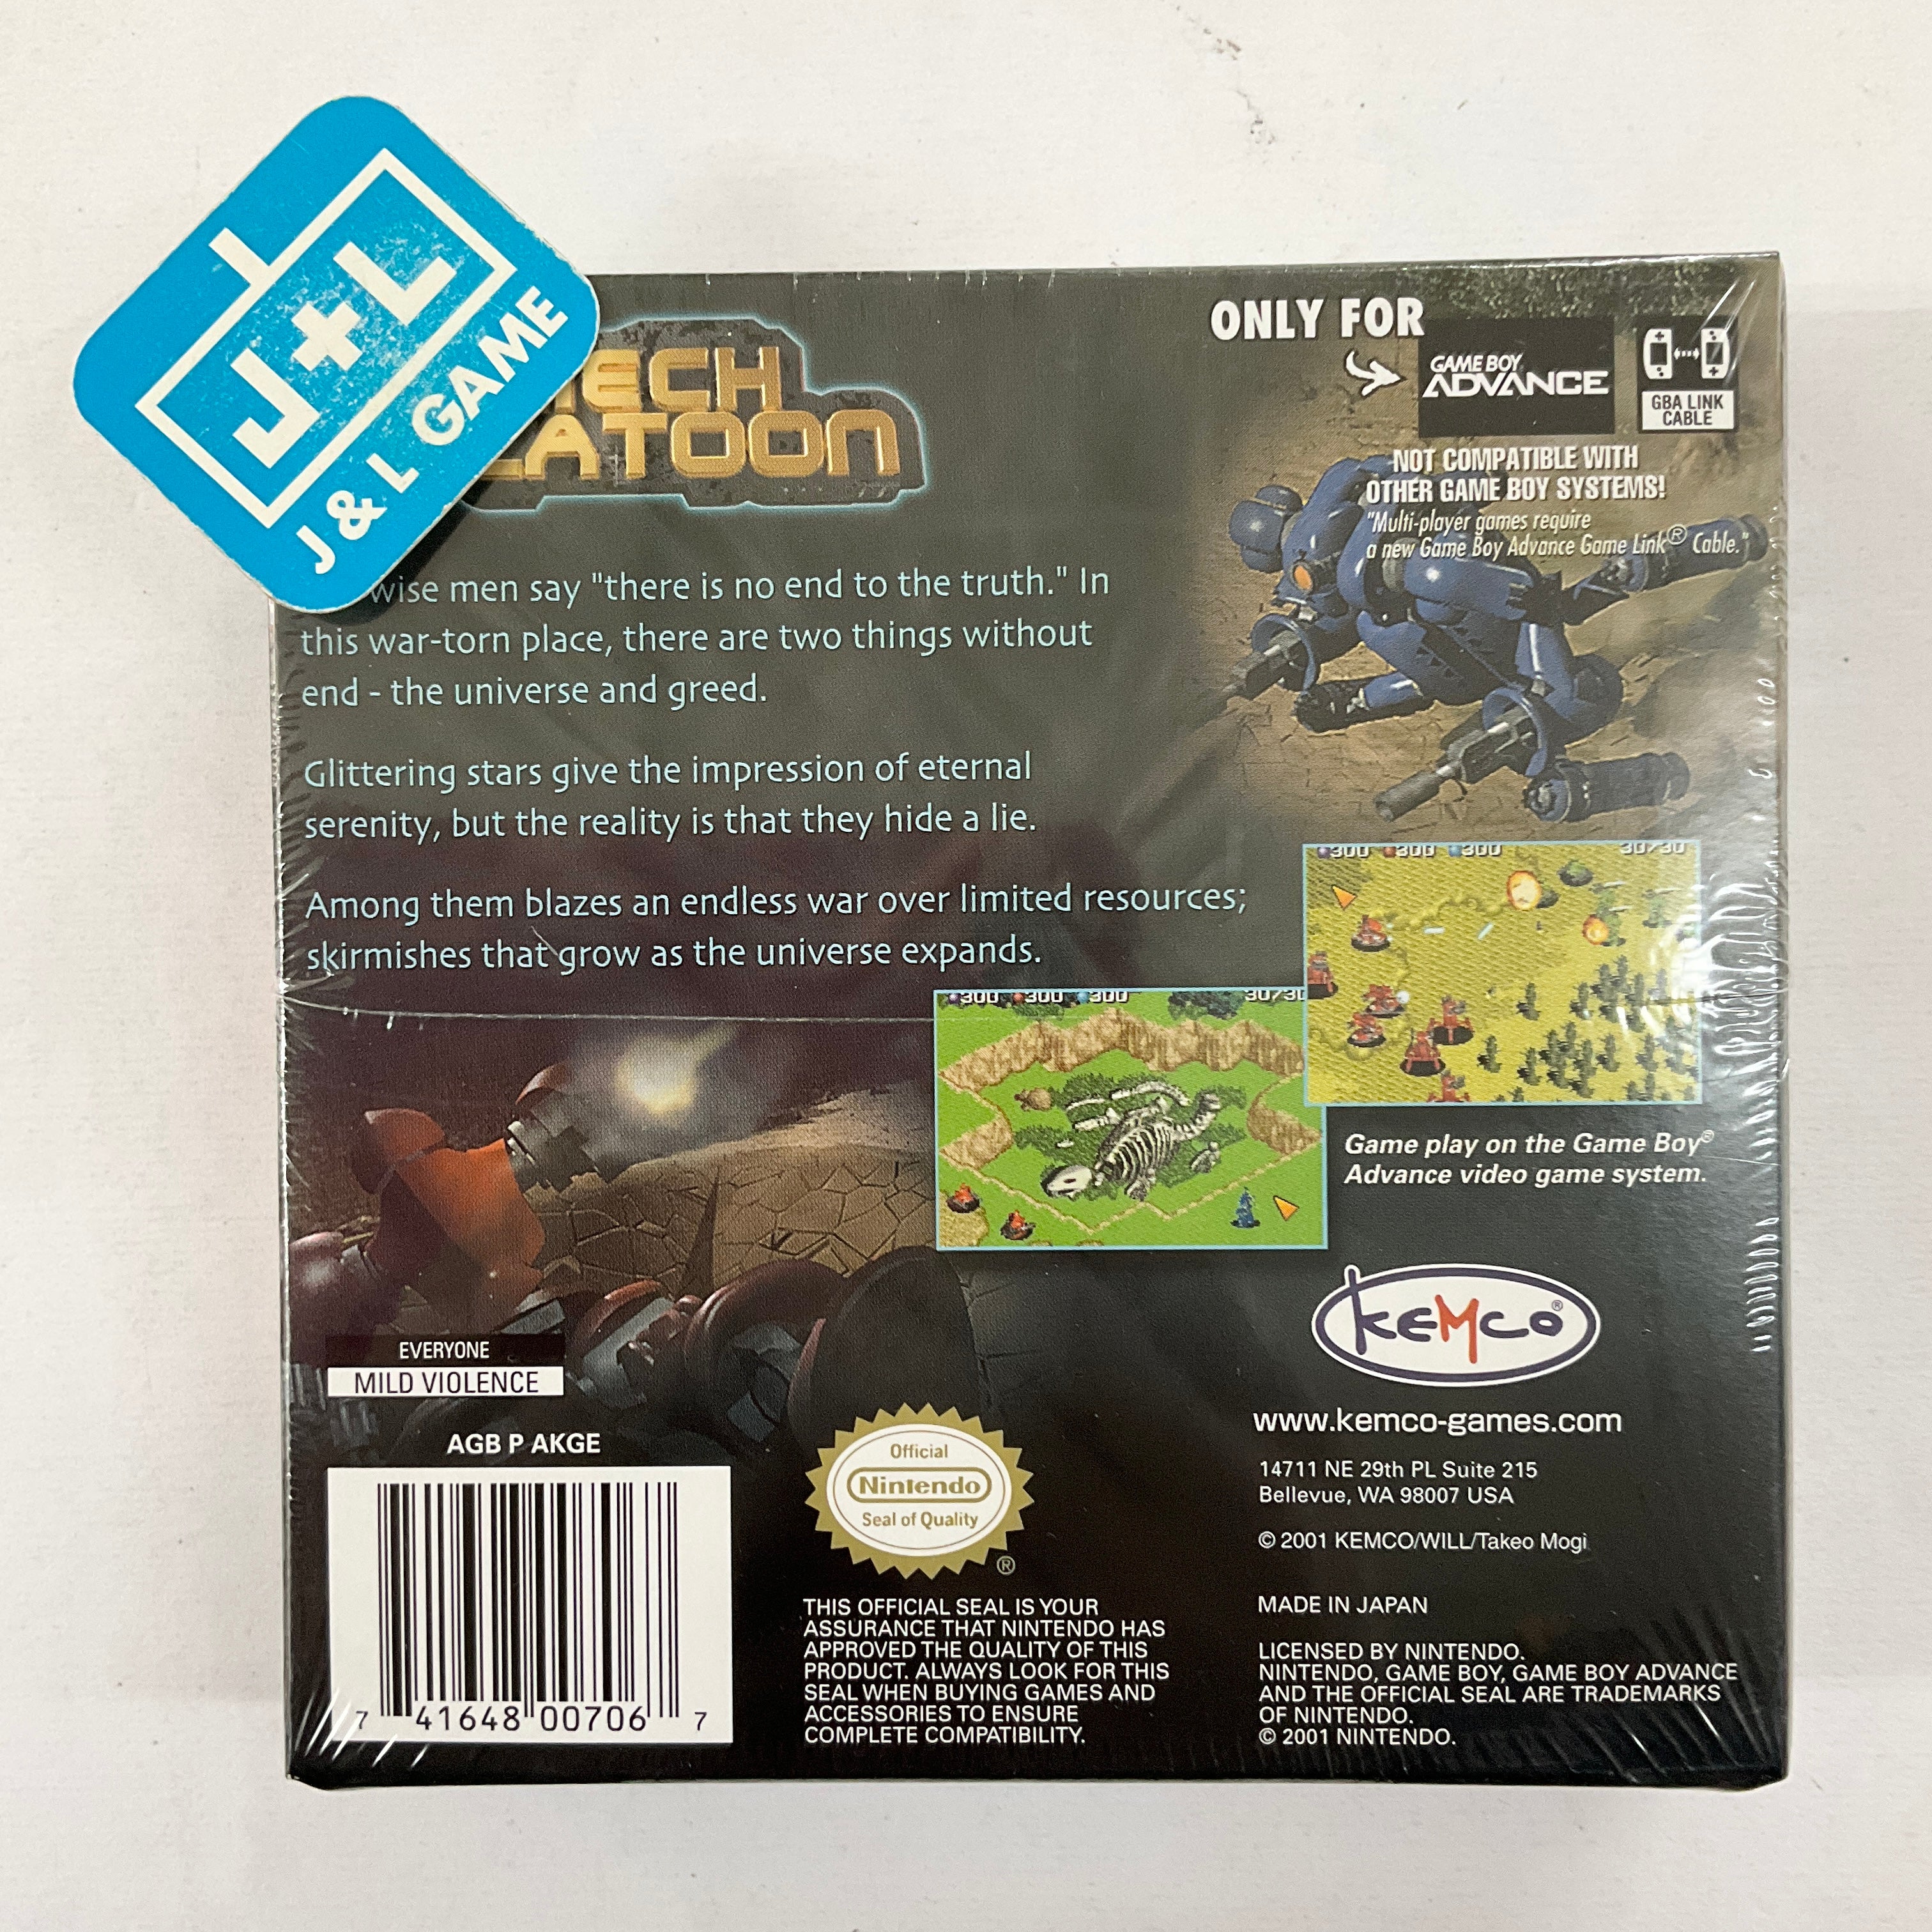 Mech Platoon - (GBA) Game Boy Advance